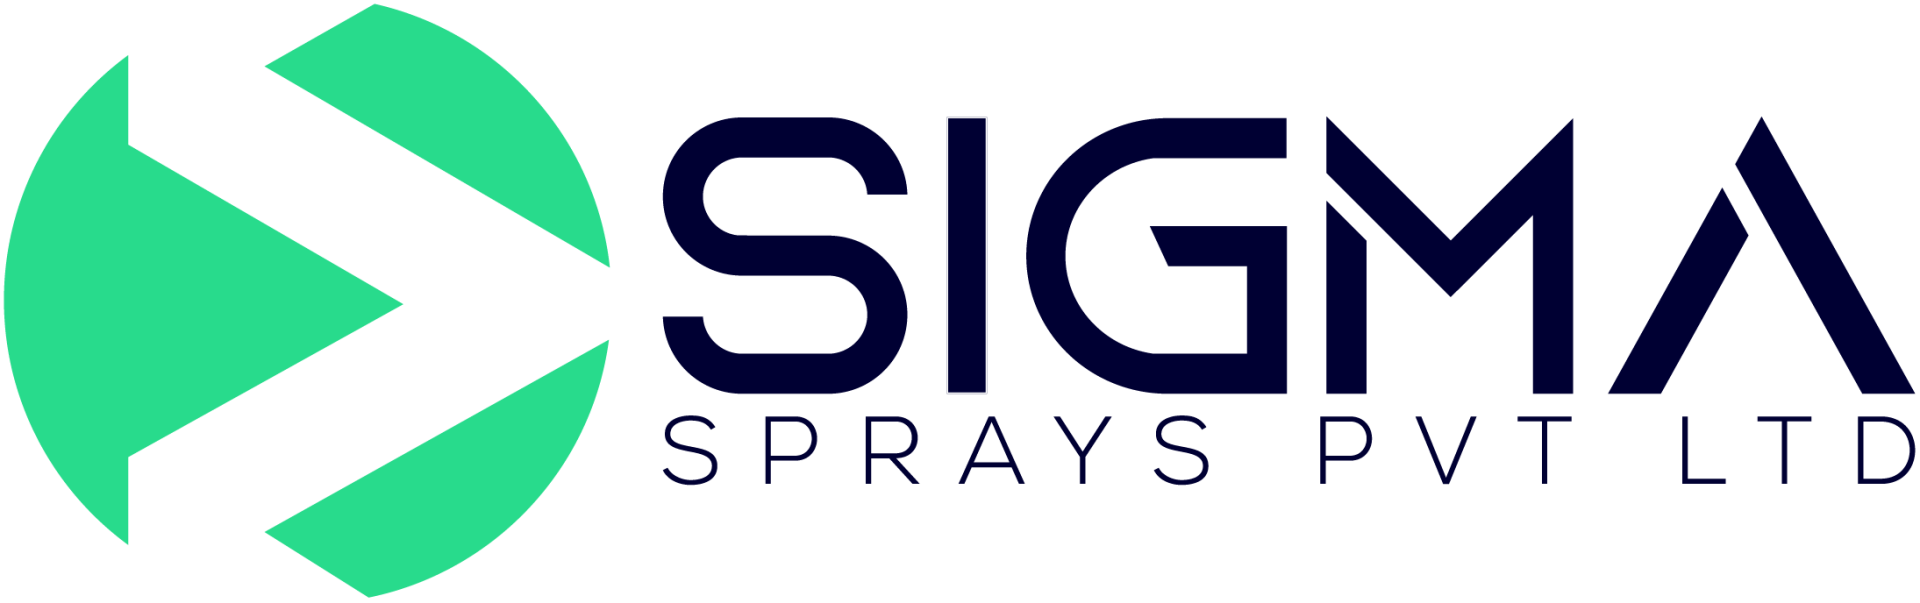 Sigma Sprays